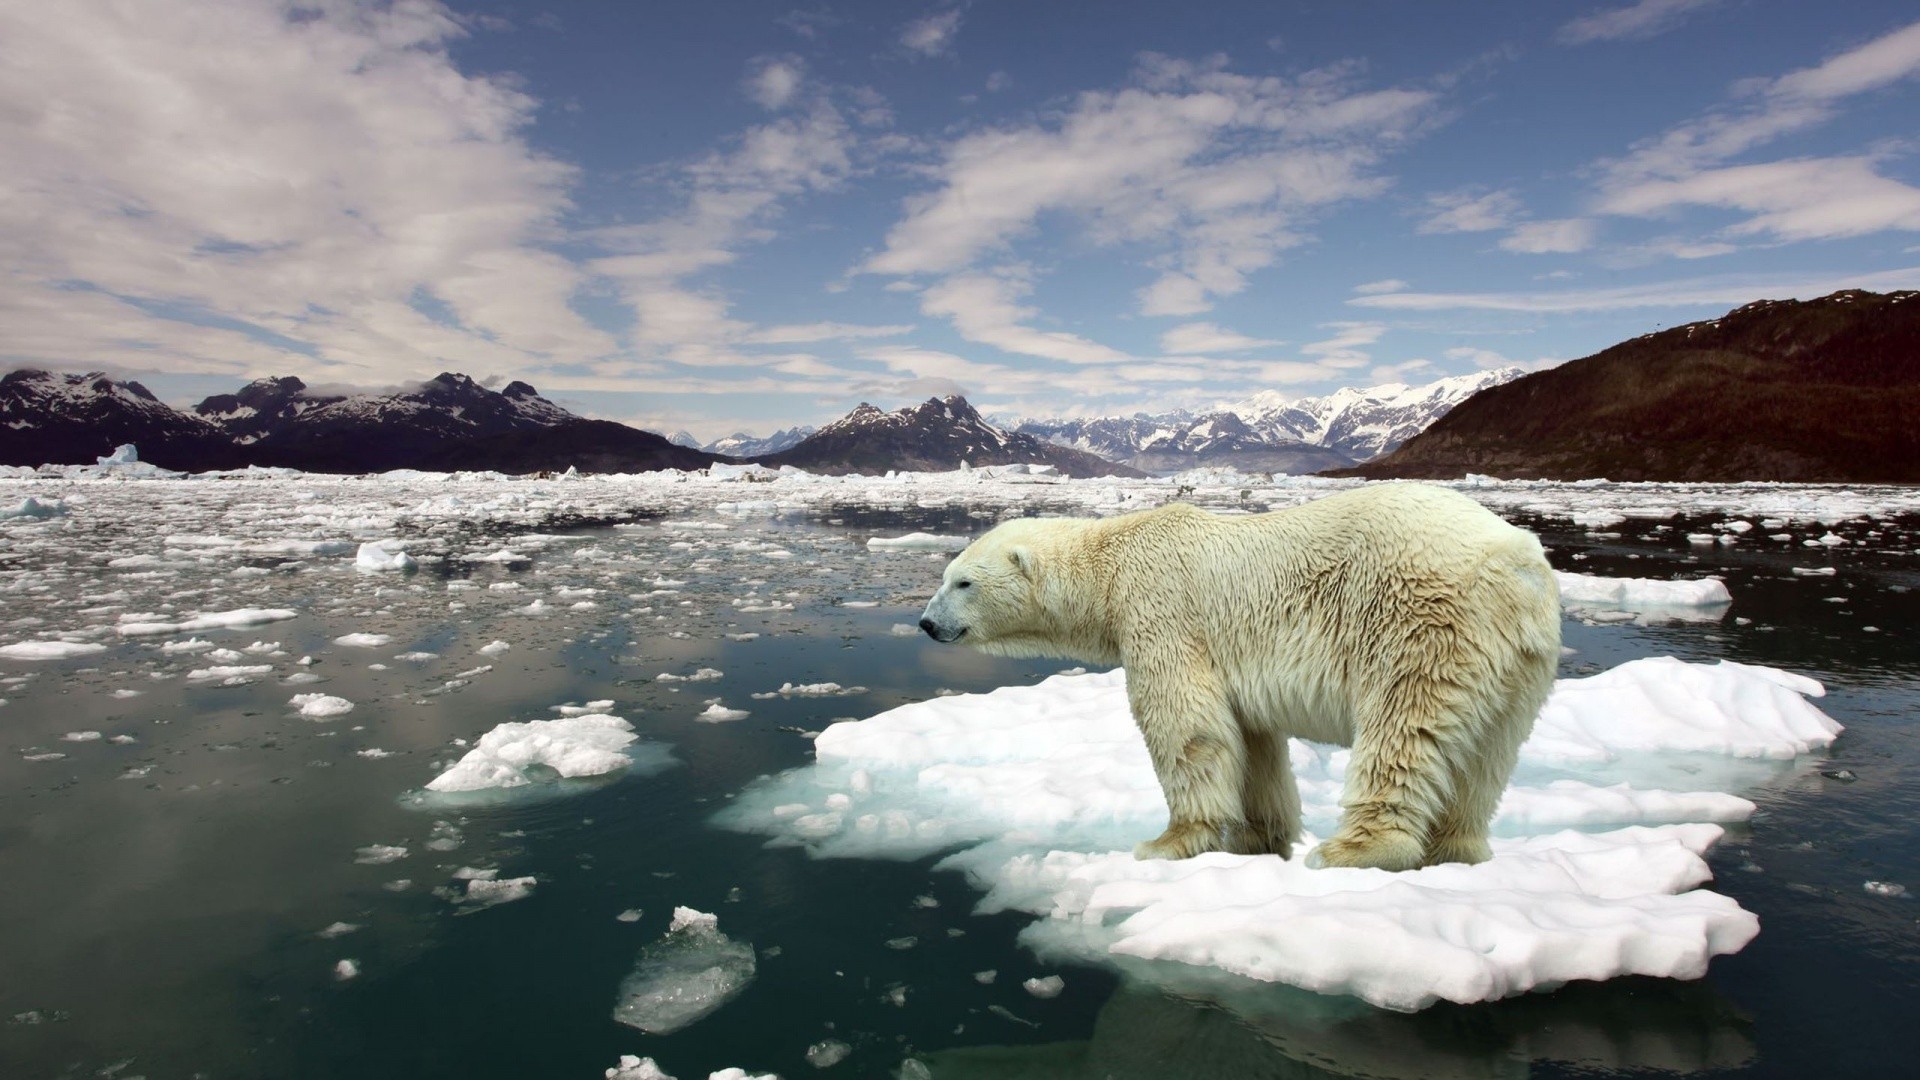 General 1920x1080 nature animals polar bears landscape Arctic mountains iceberg snow sea mammals reflection bears